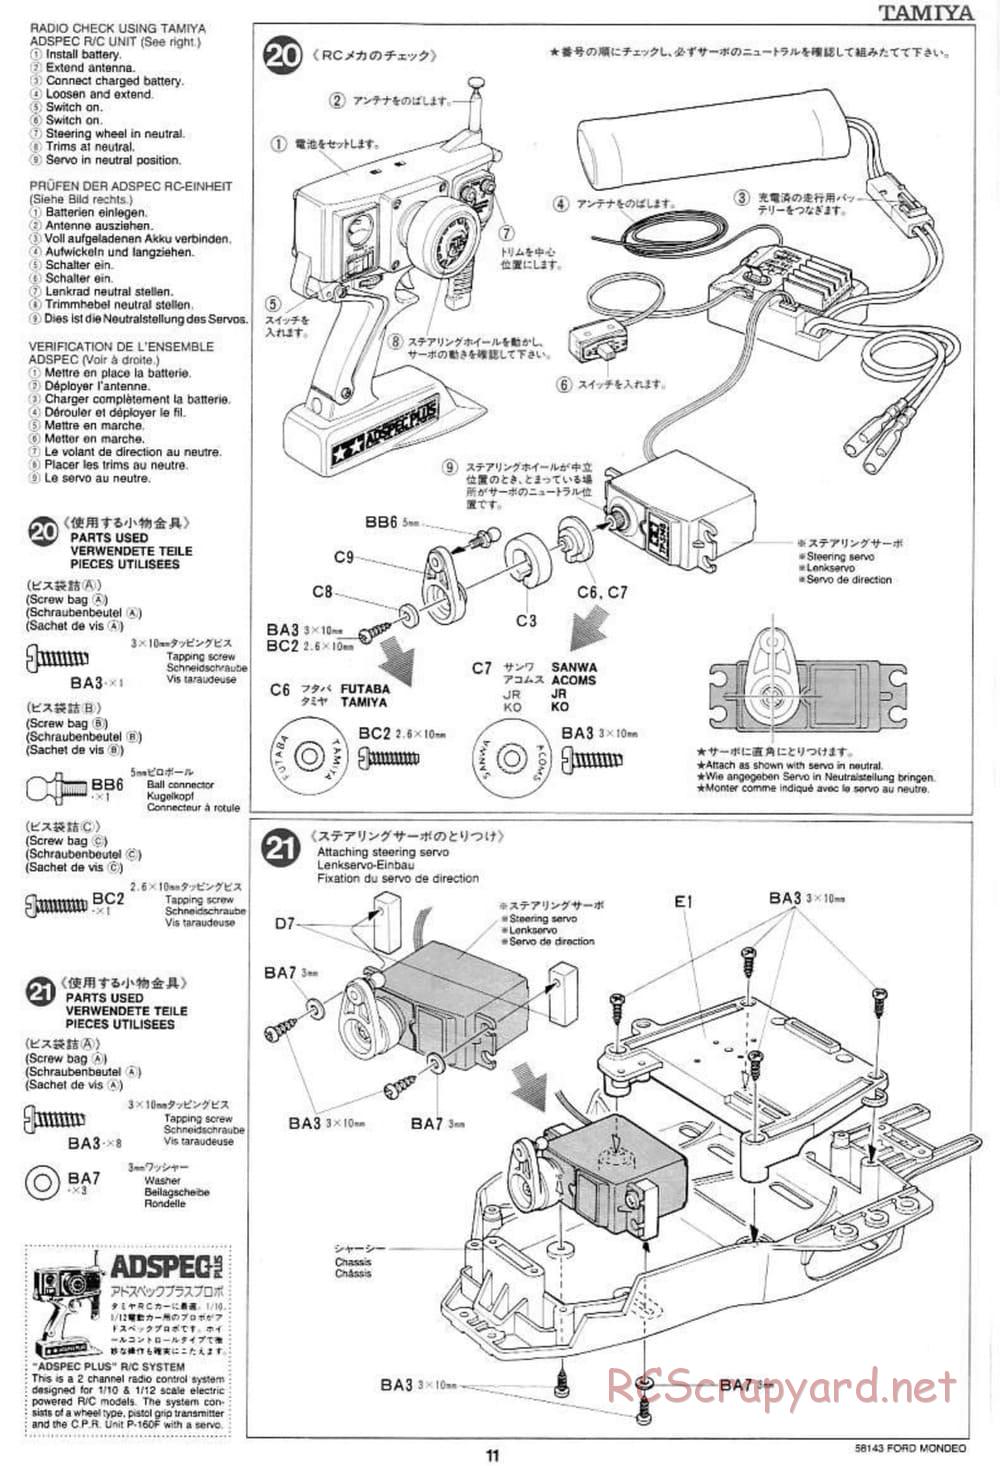 Tamiya - Ford Mondeo BTCC - FF-01 Chassis - Manual - Page 11